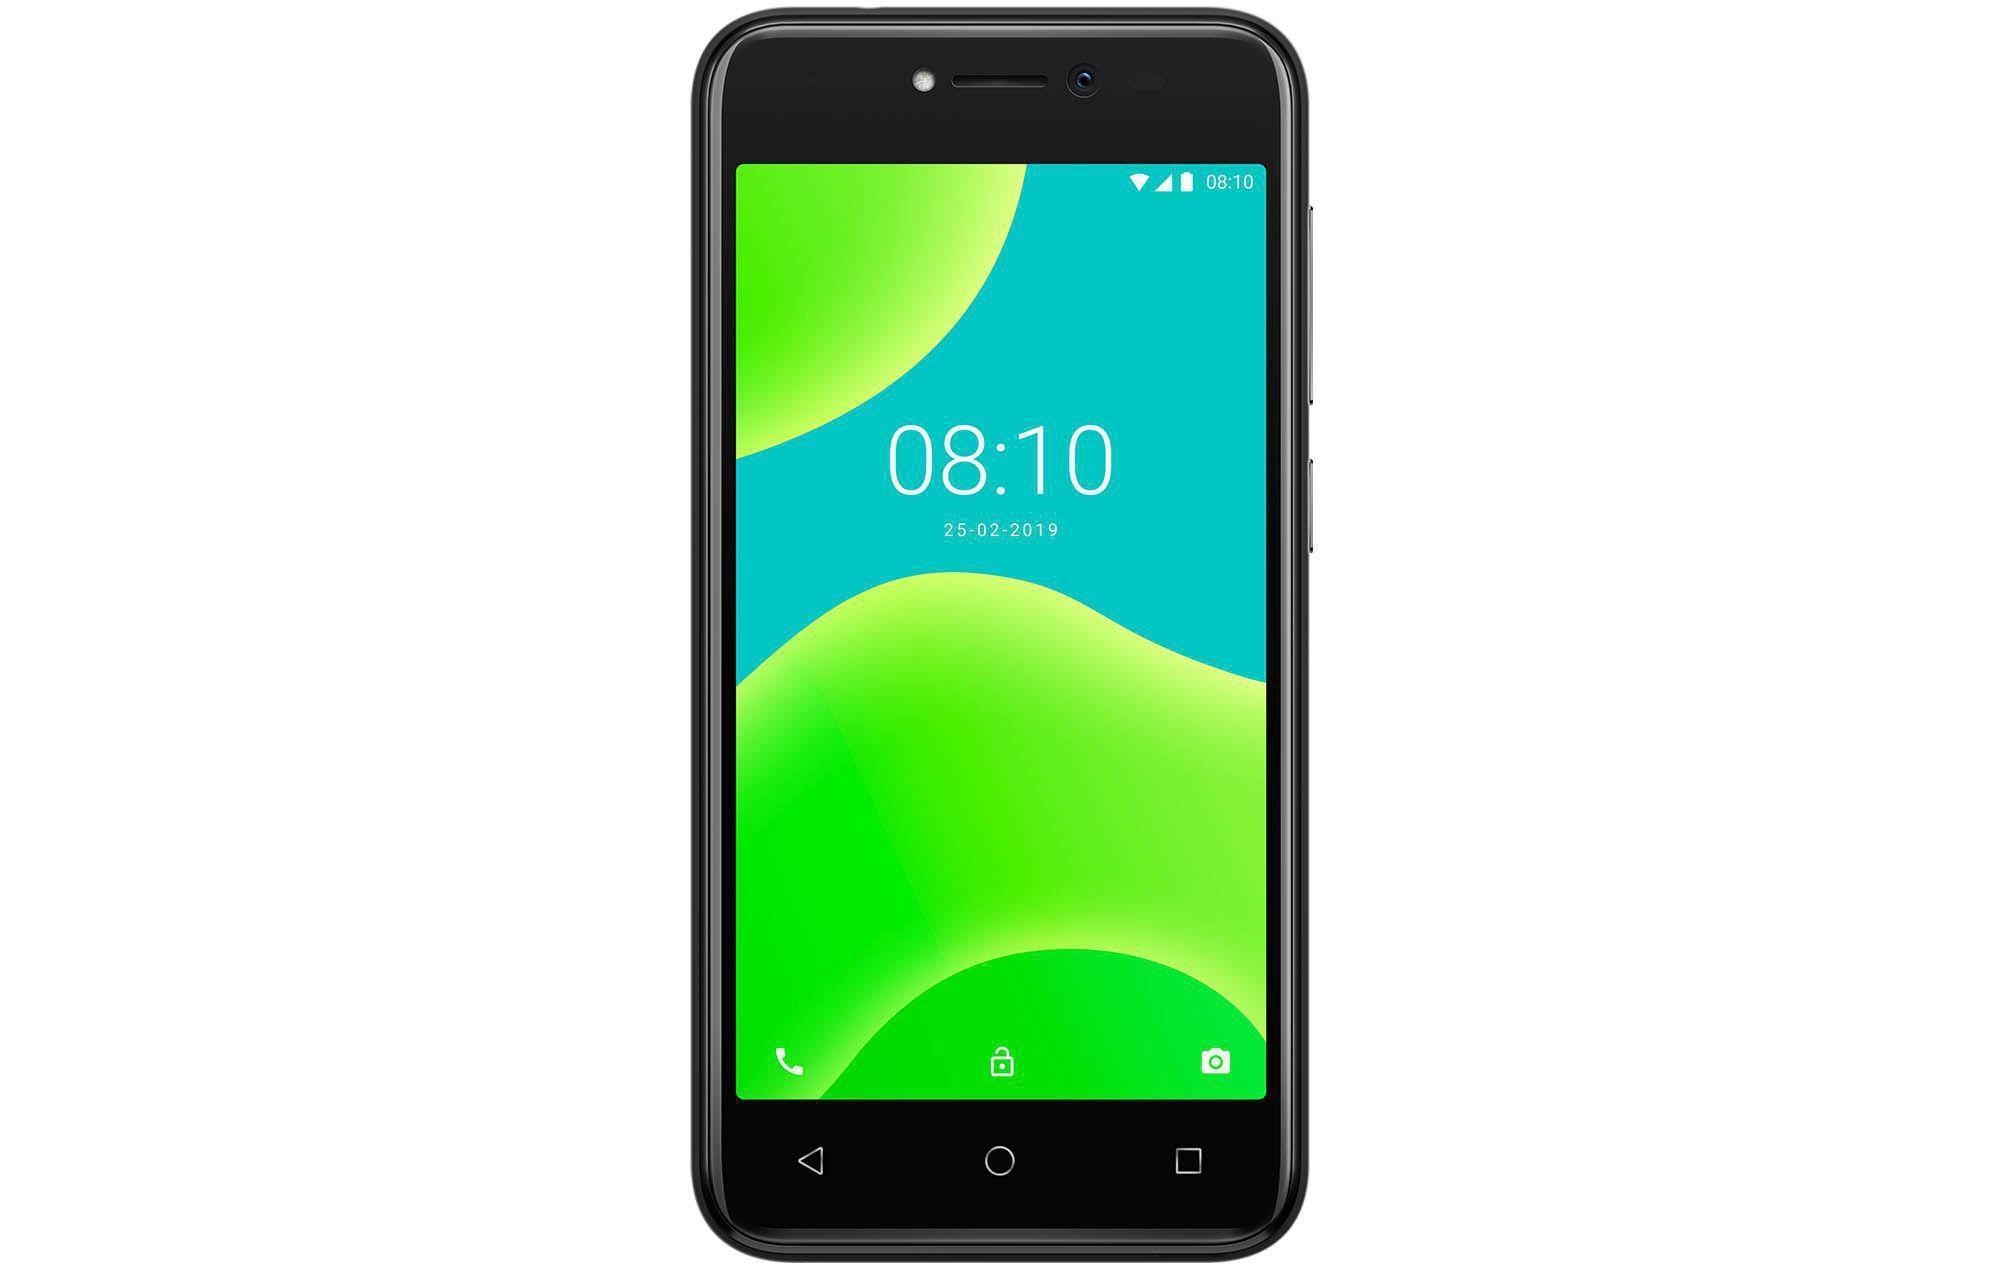 WIKO Smartphone »Y50«, grau, 12,7 cm/5 Zoll